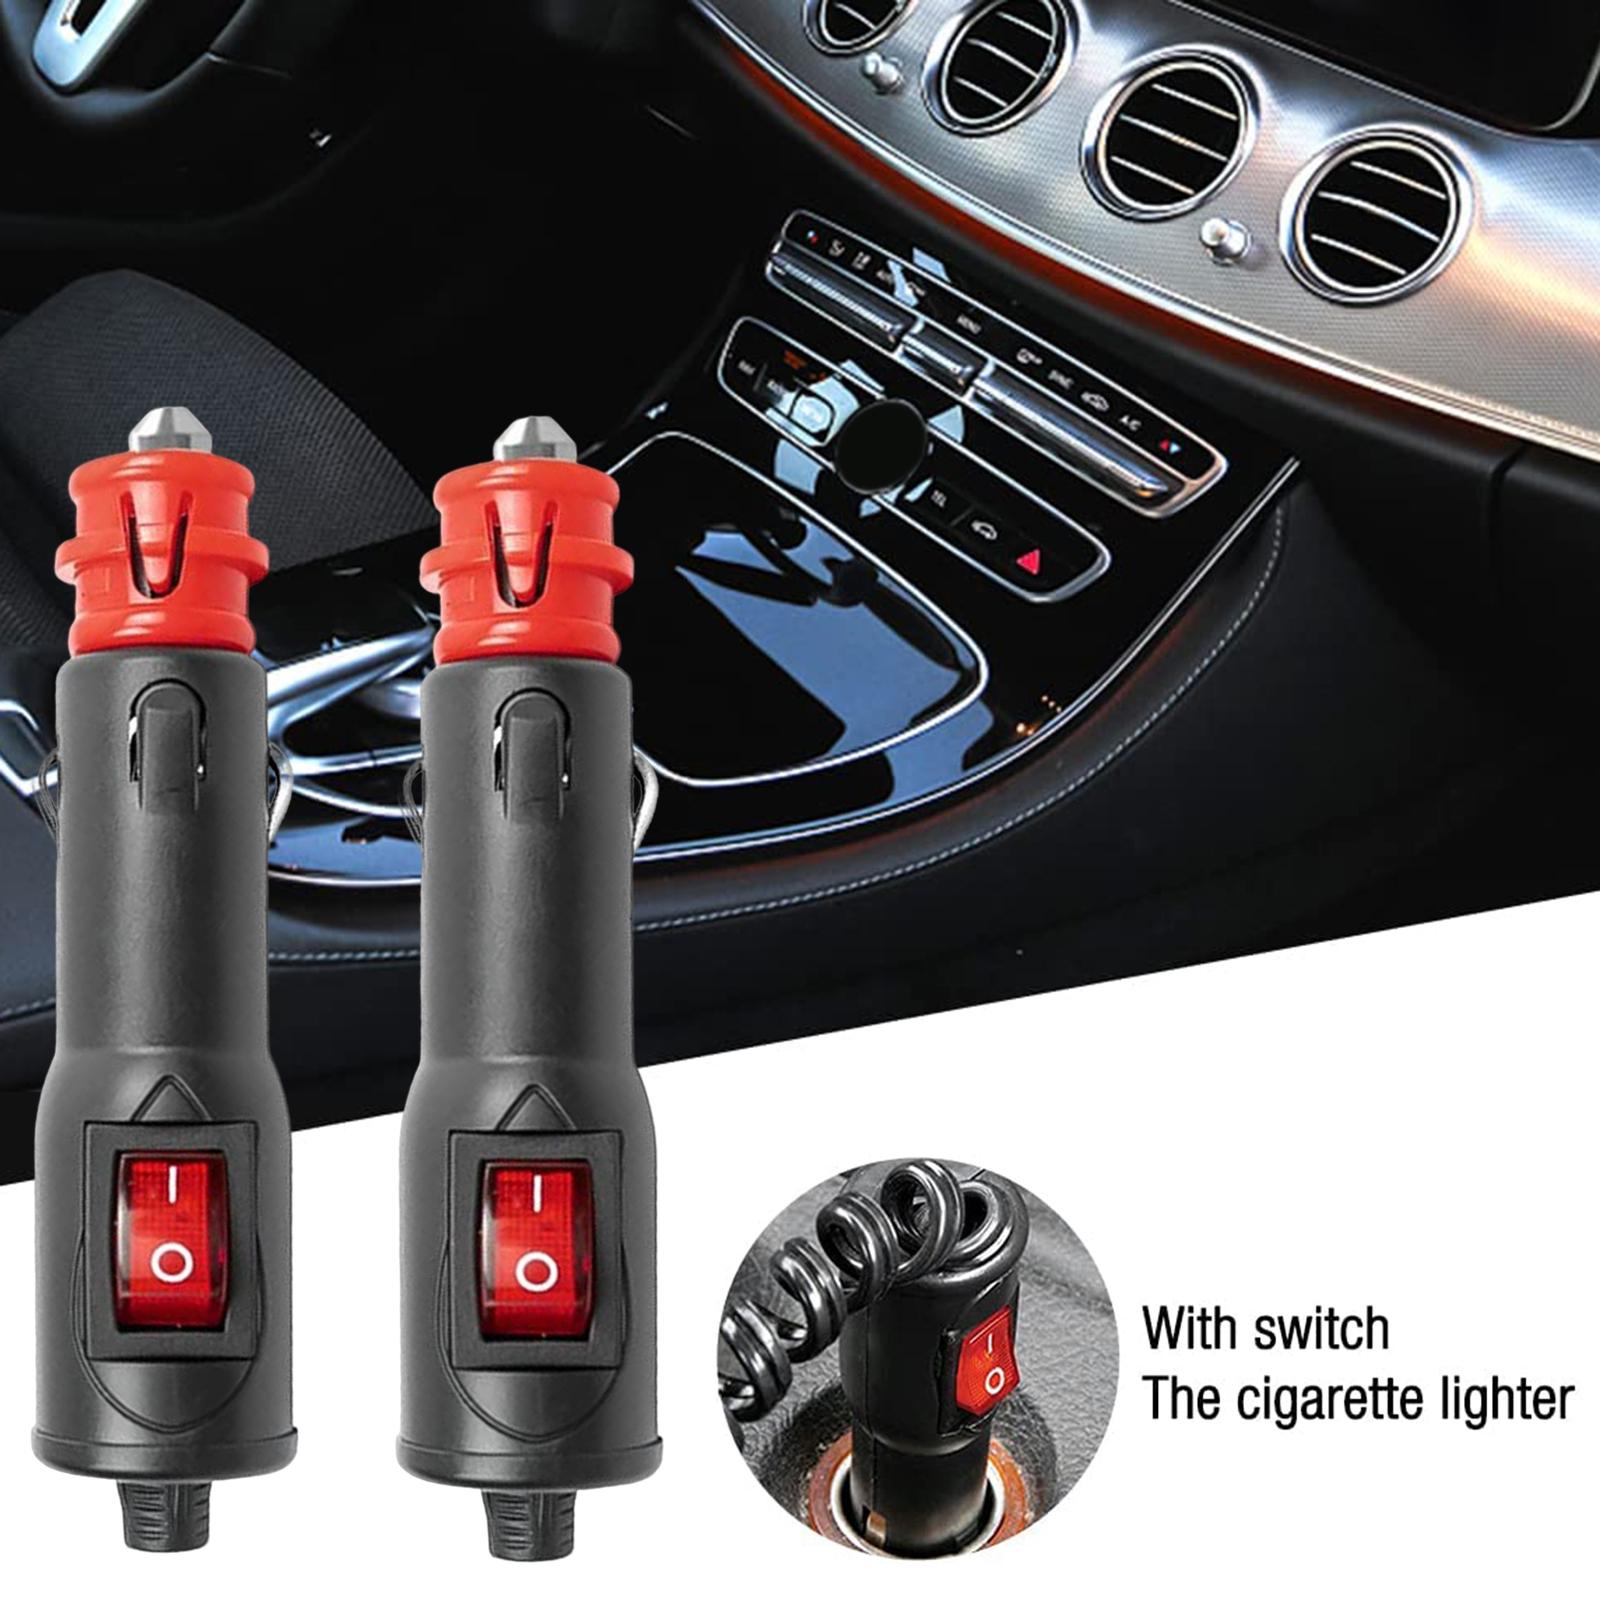 2x Heavy Duty Cigarette Lighter Plug 12V for Car Tire Inflator Cleaner